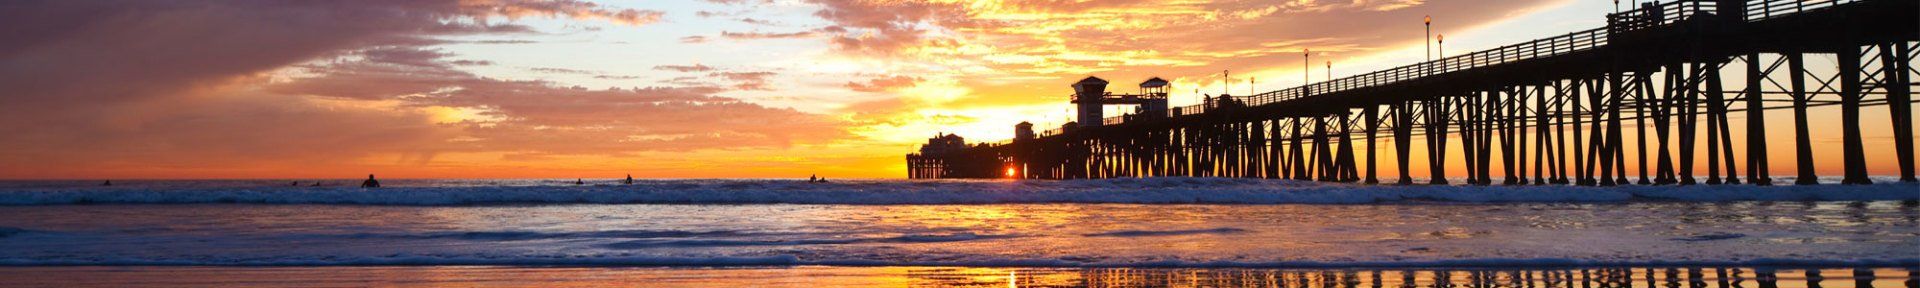 California pier at sunset